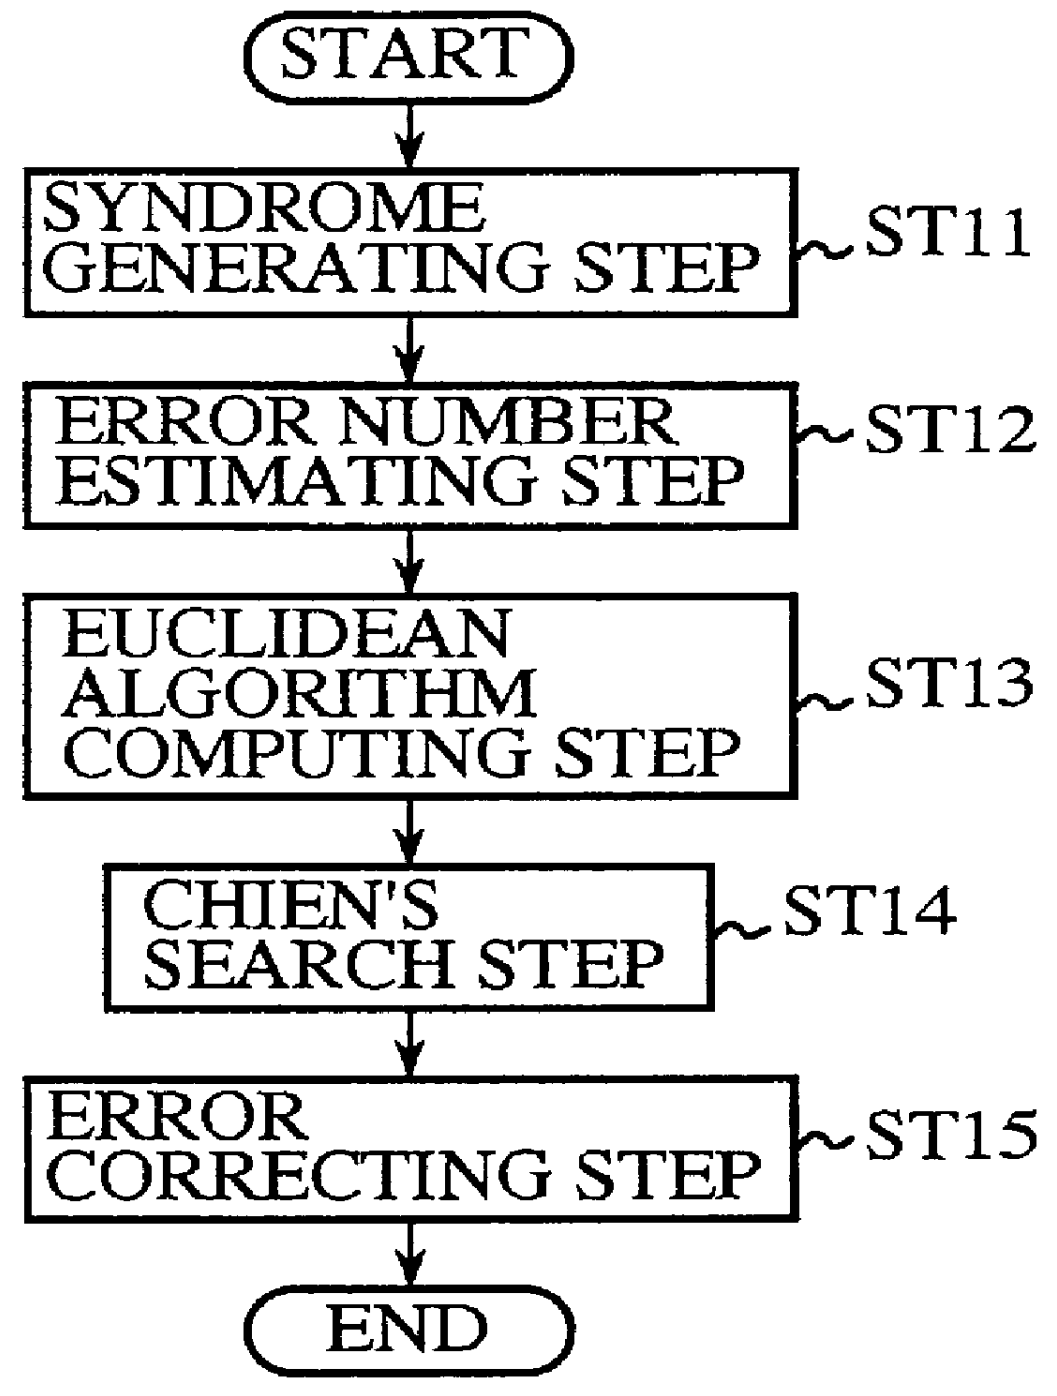 Error correcting decoding apparatus of extended Reed-Solomon code, and error correcting apparatus of singly or doubly extended Reed-Solomon codes